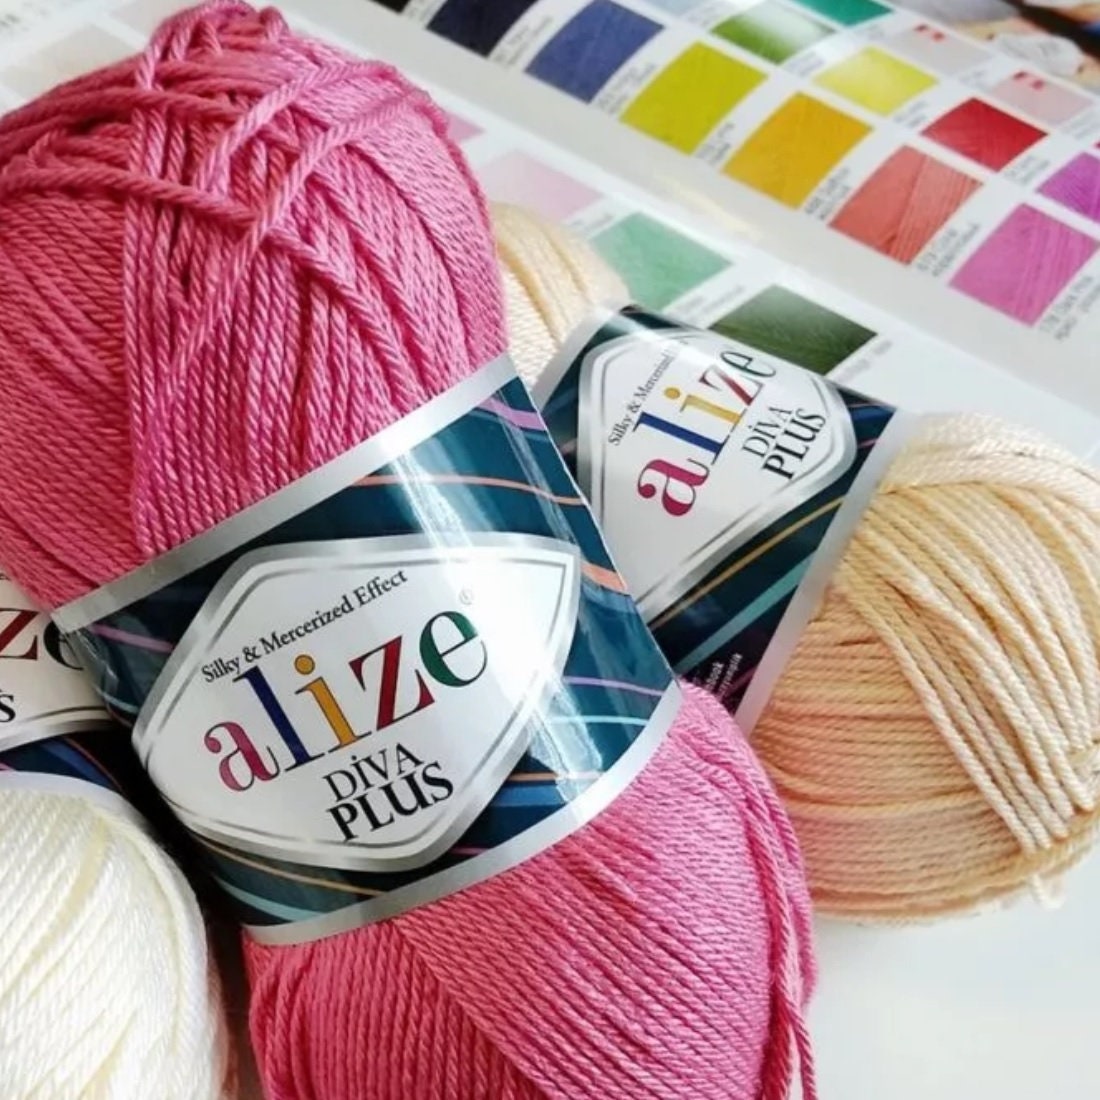 Alize Diva Yarn Hand Knitting Yarn 100% Microfiber Acrylic Yarn Alize Diva  Silk Effect Thread Crochet Art Lace Craft Lot of 3 skeins 400gr 1314yds  Color (383 - Stone)